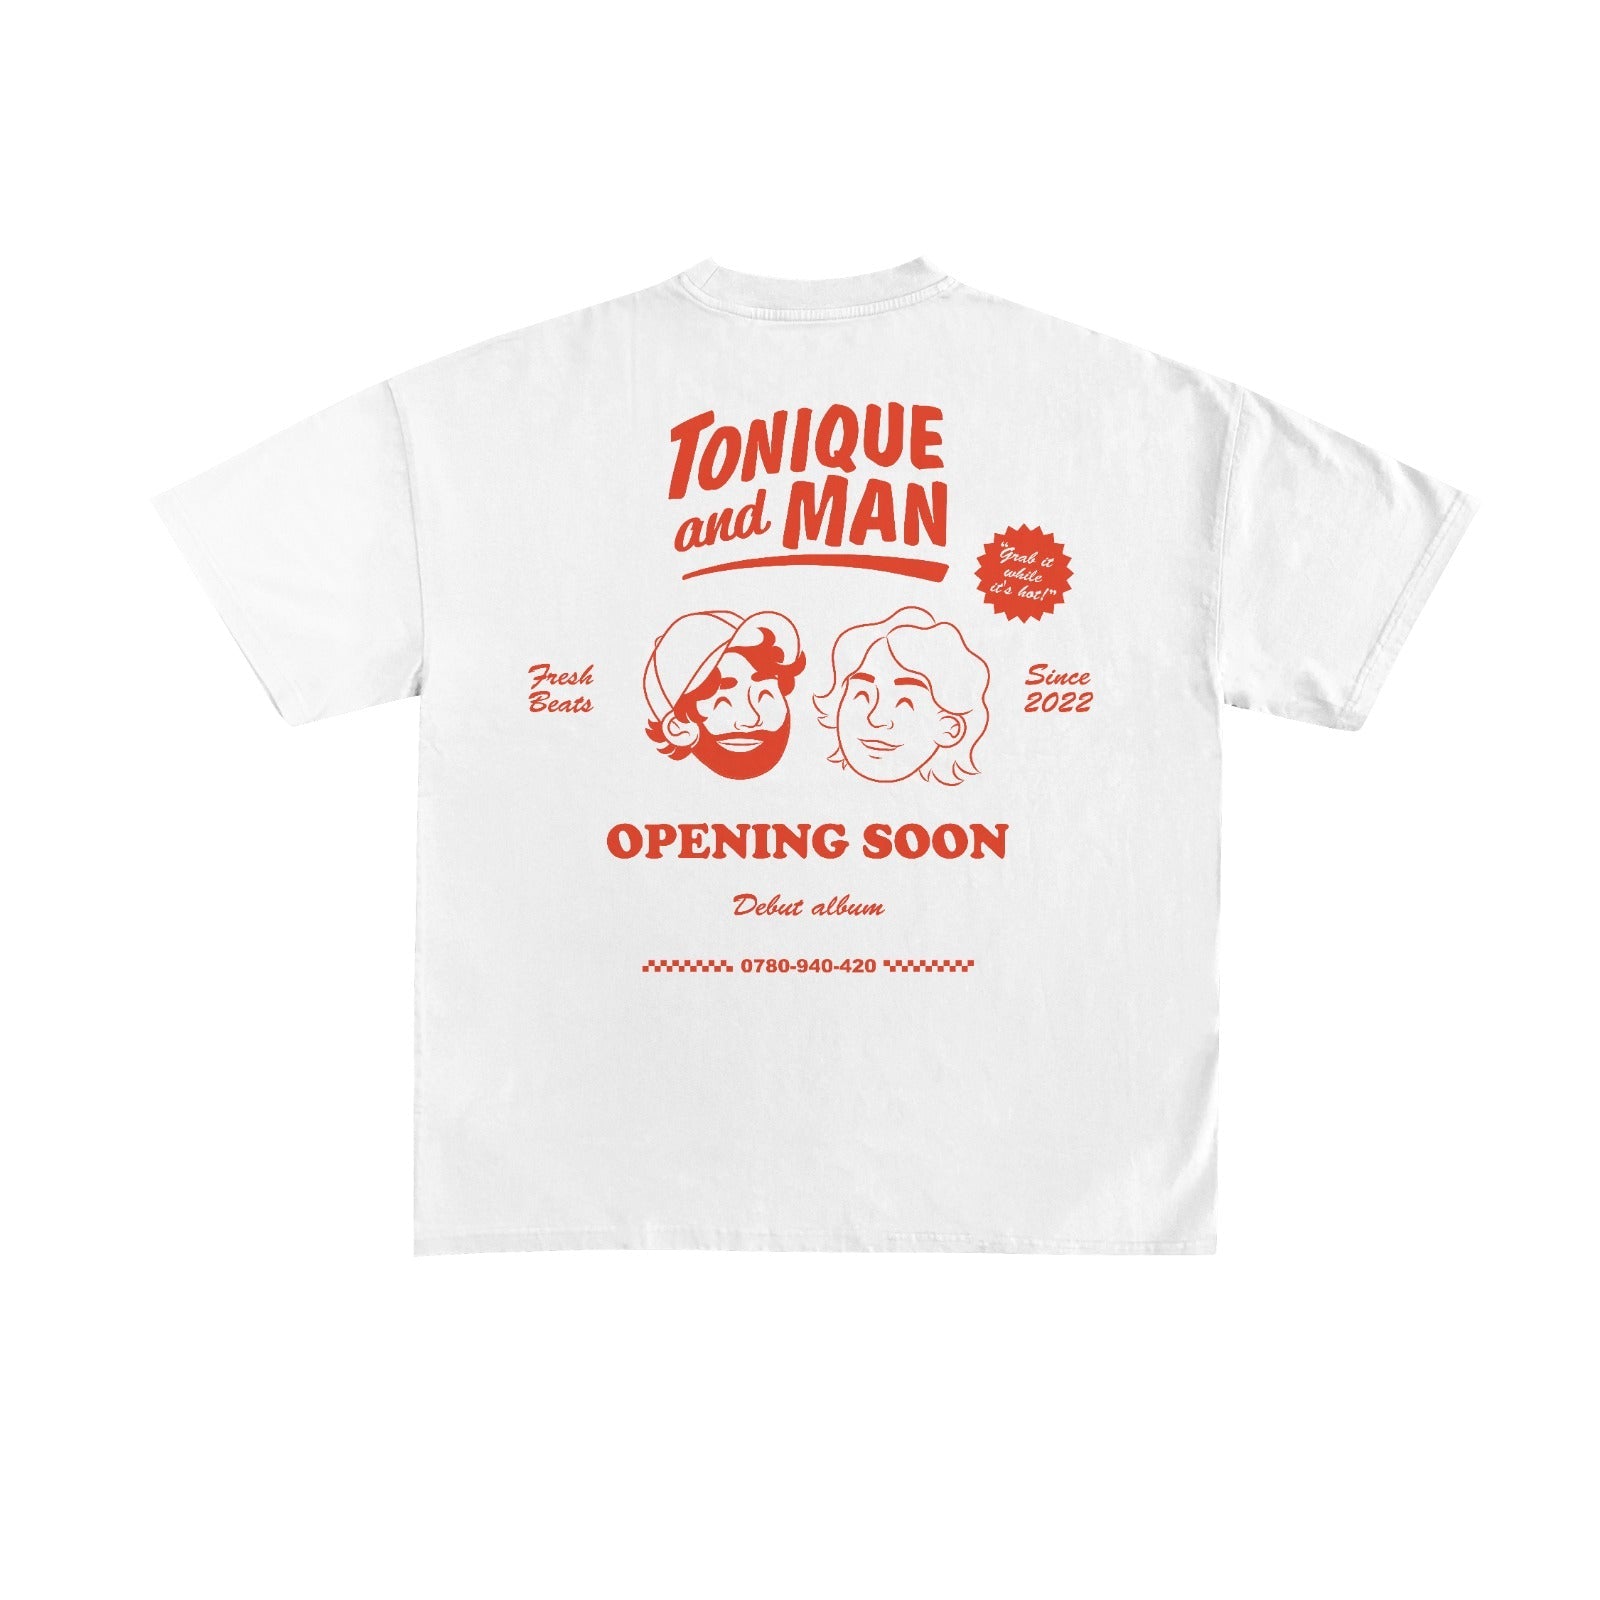 Opening Soon - T-shirt